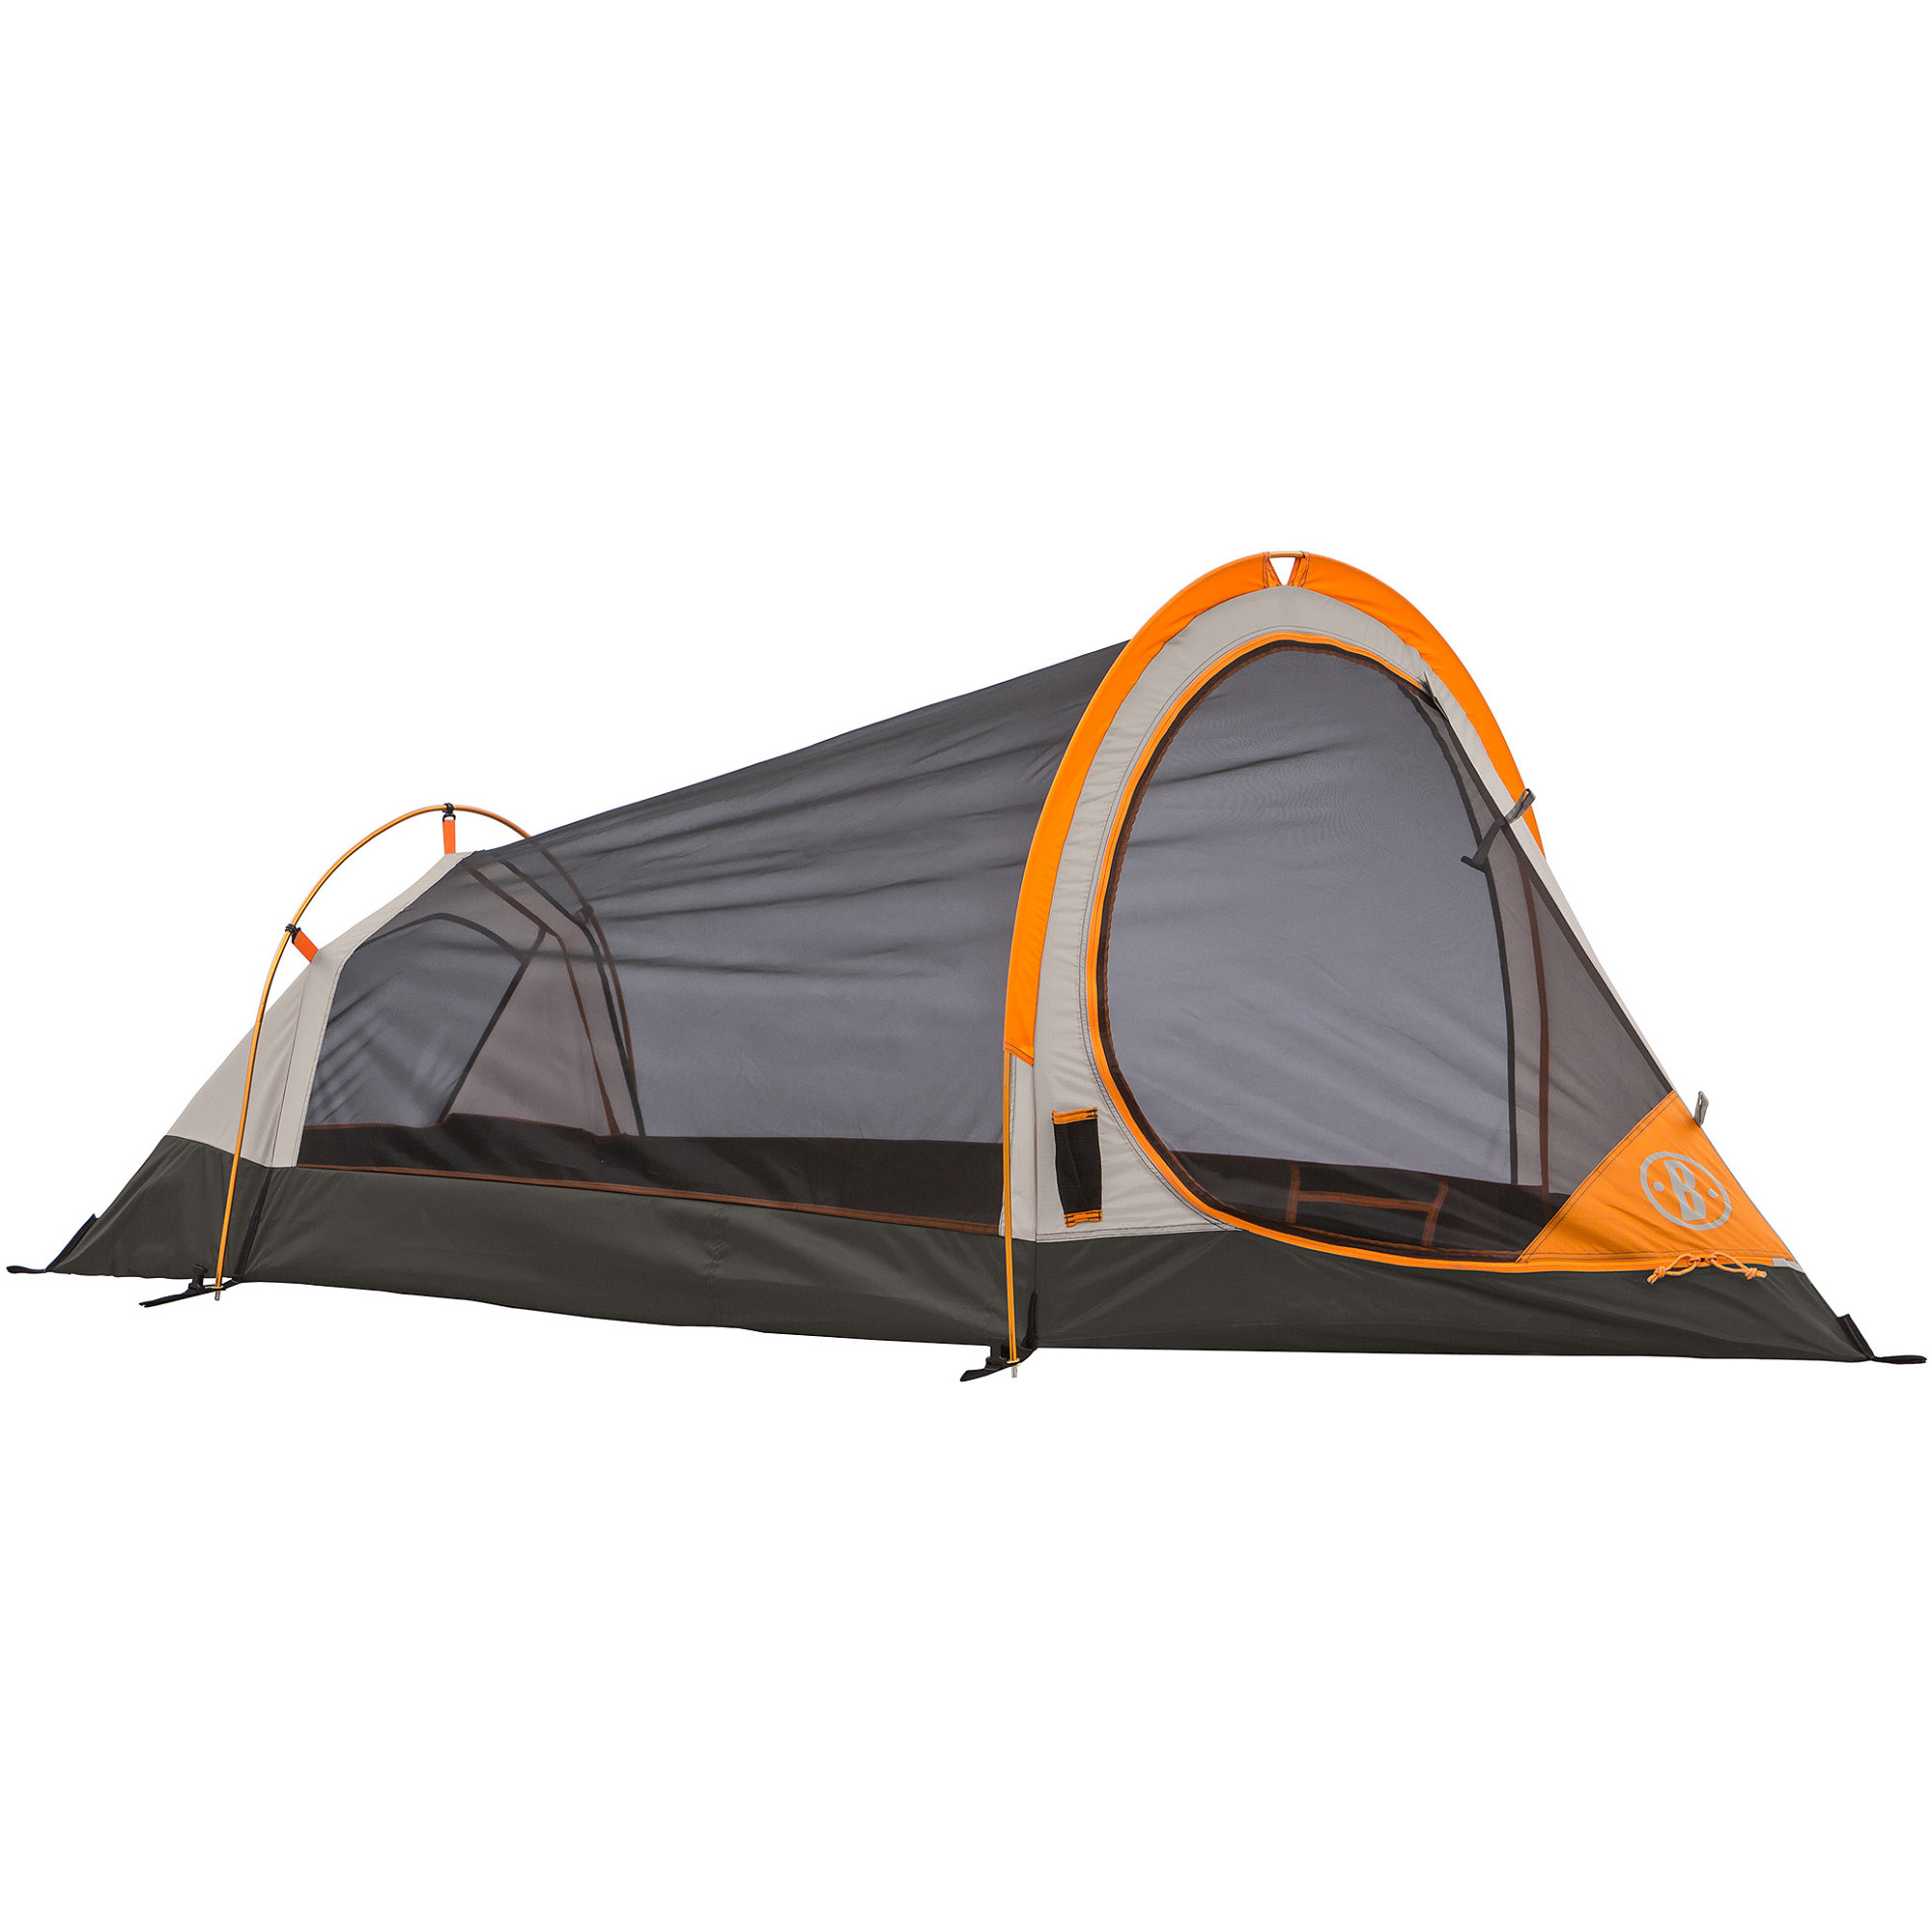 Bushnell Roam Series 8.5' x 3' Backpacking Tent, Sleeps 1 - image 3 of 6